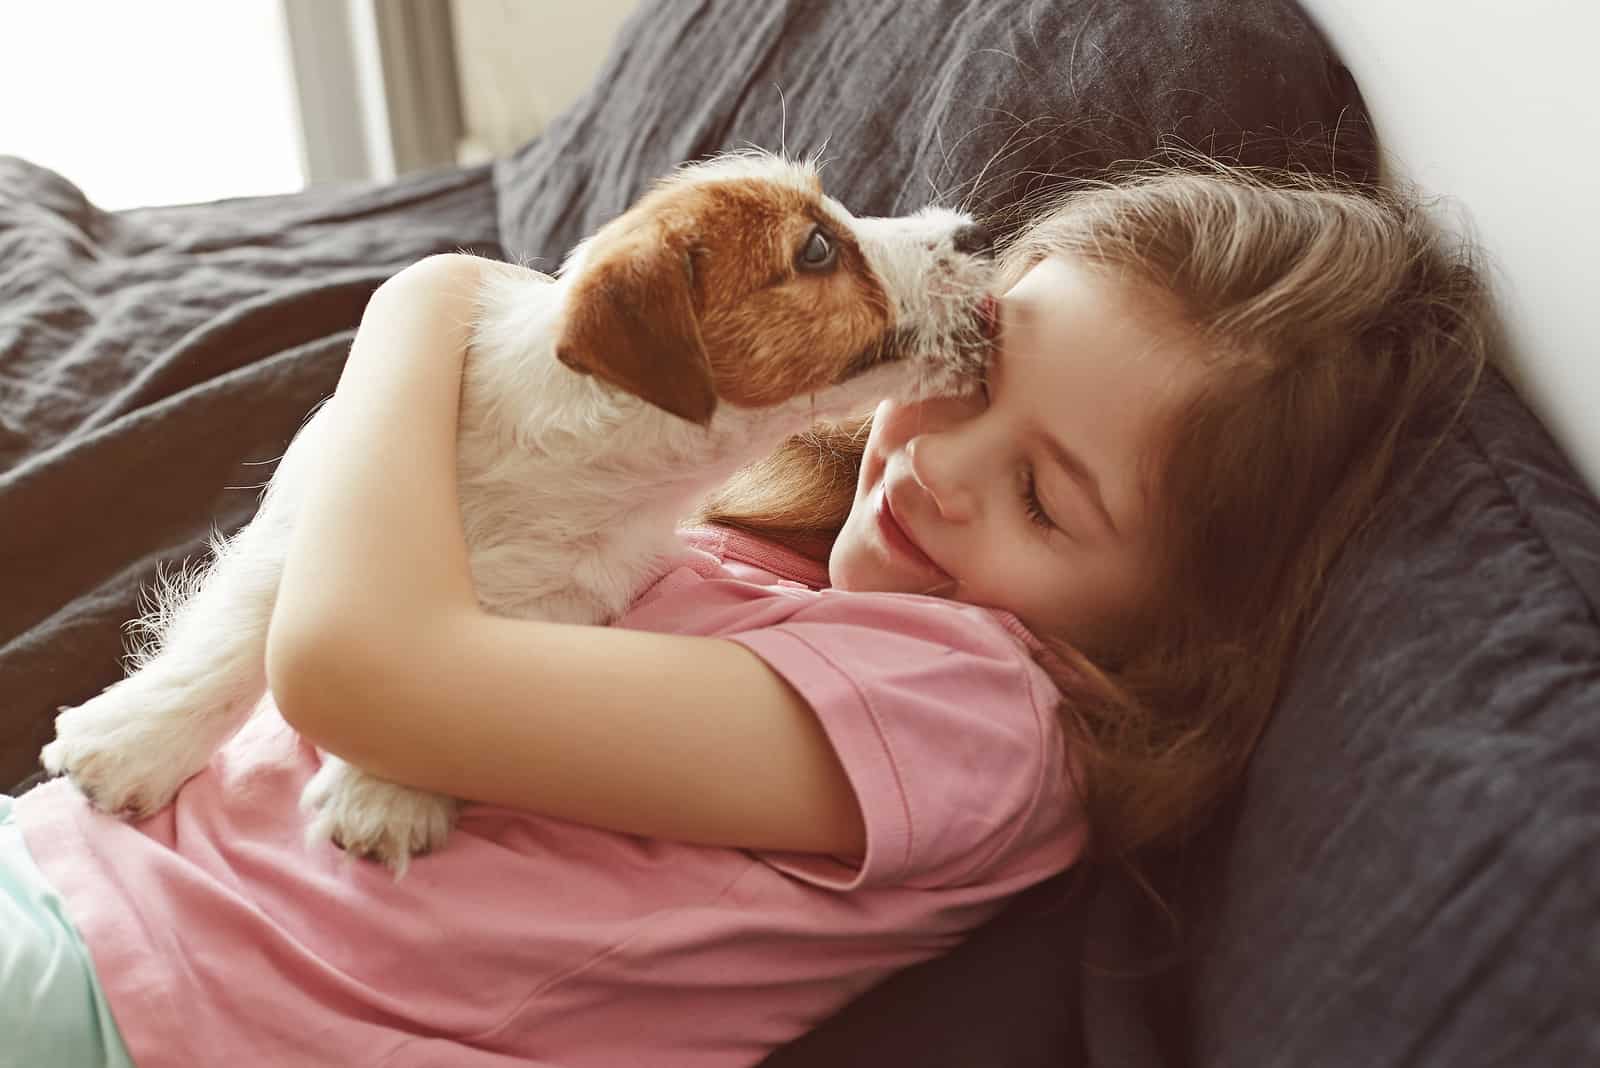 Jack Russell Terrier Puppy licks little child's face